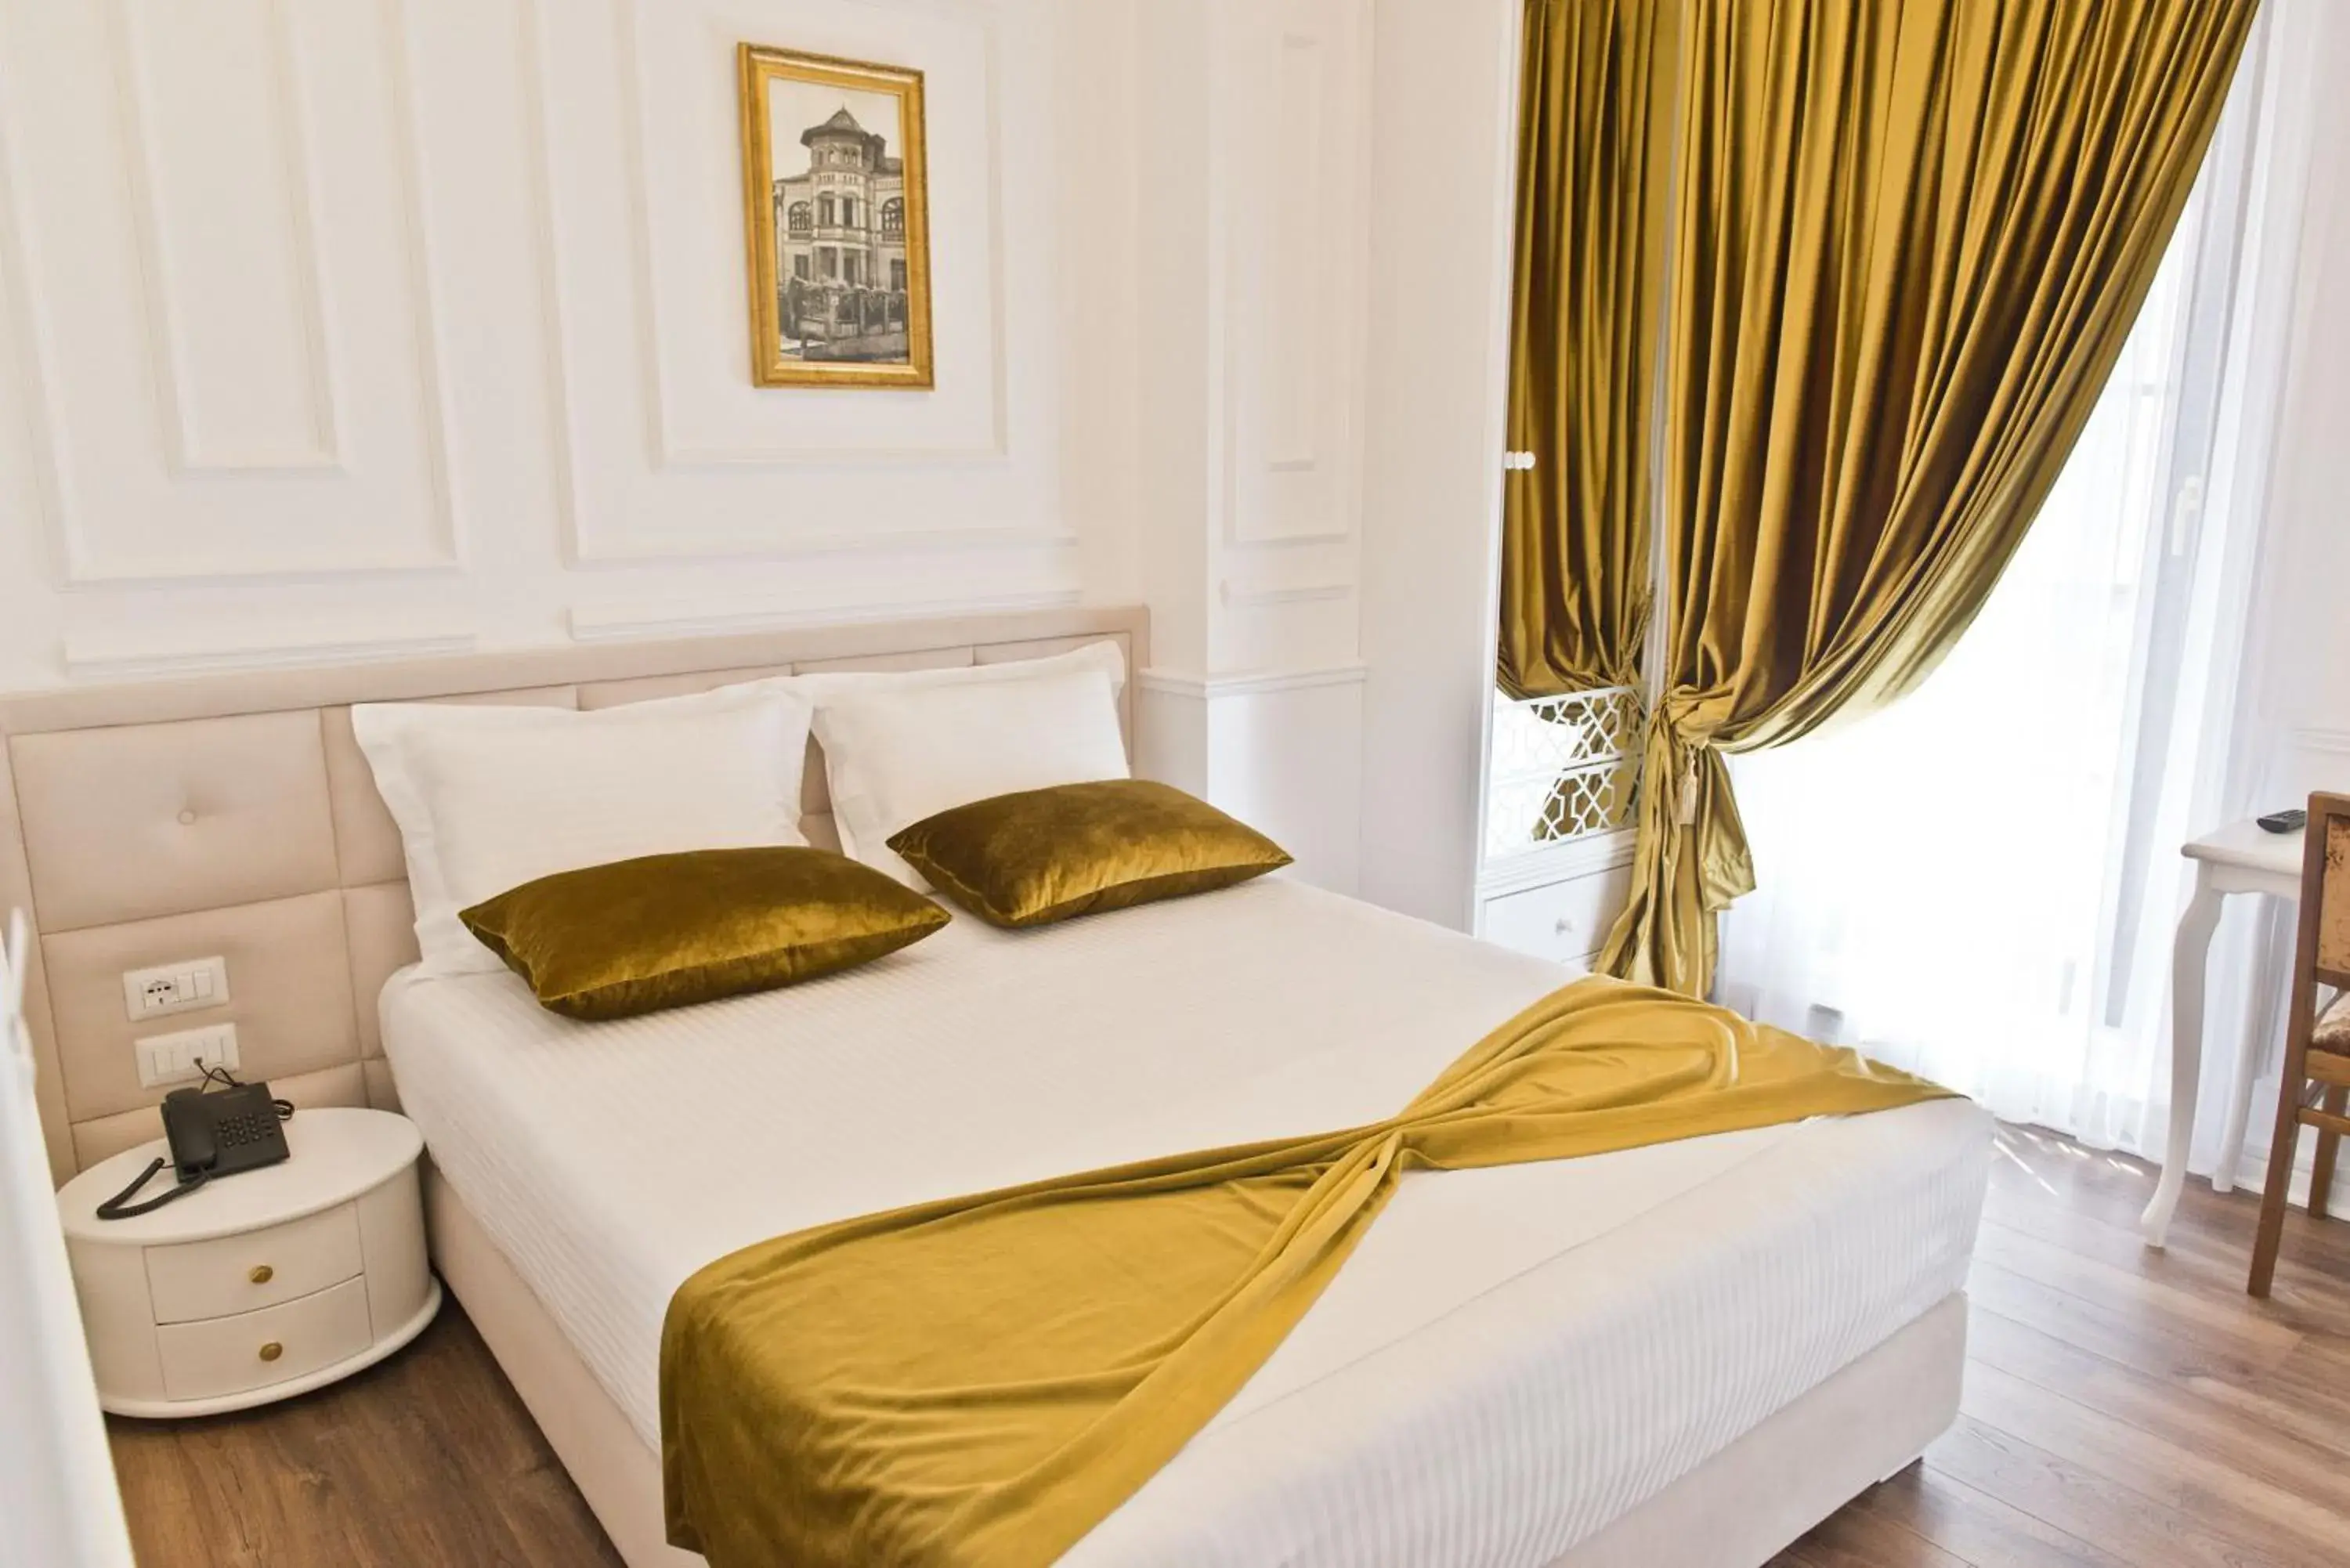 Bed, Room Photo in Eler Hotel